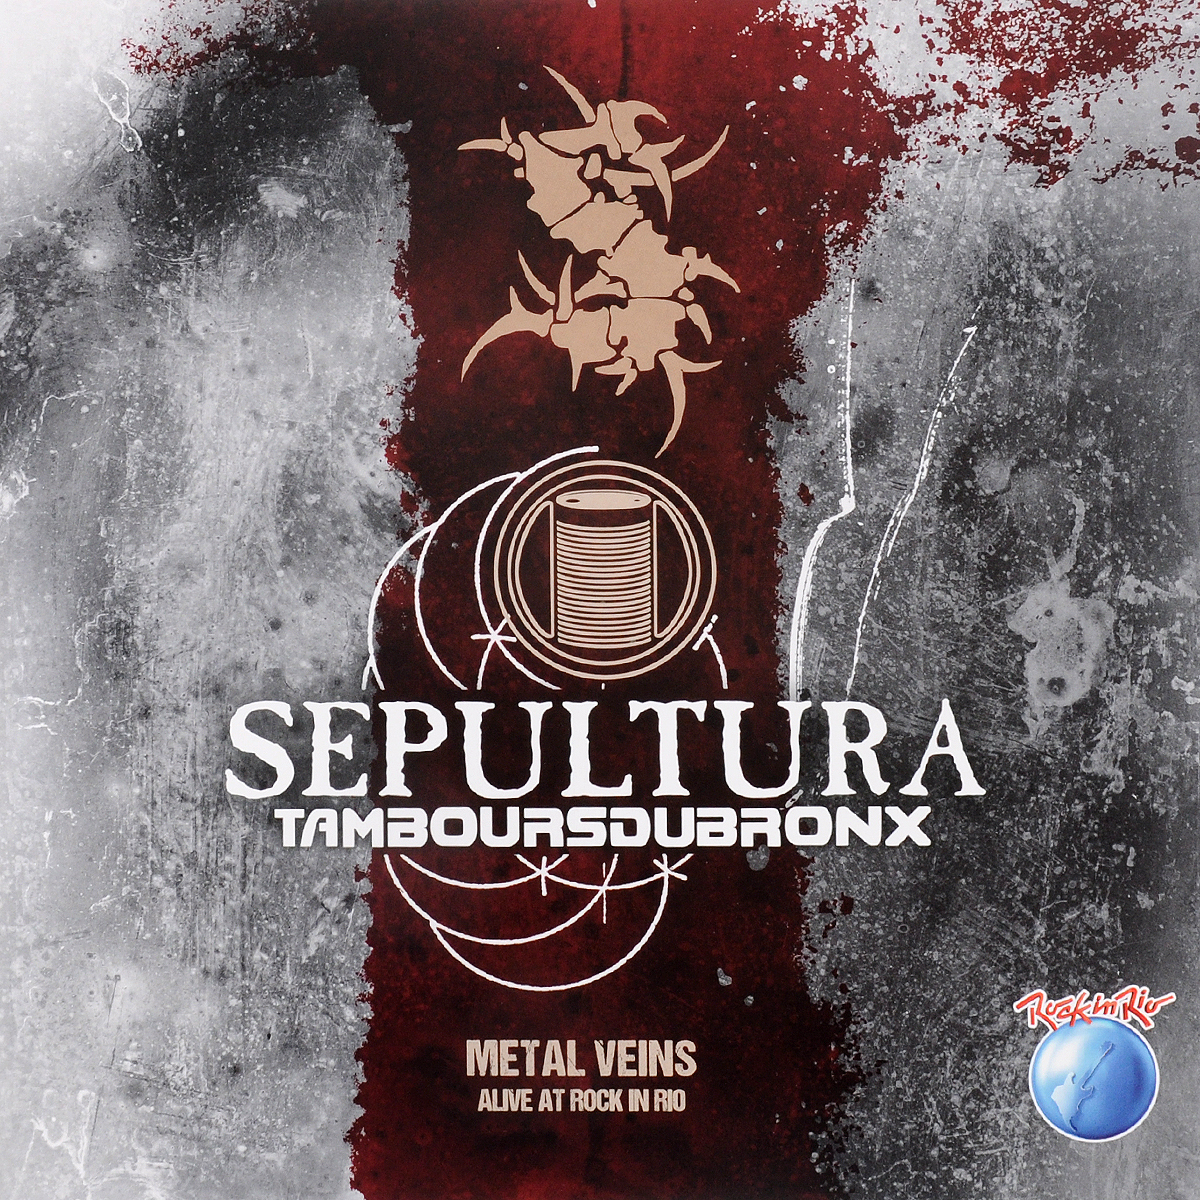 Sepultura. Metal Veins - Alive At Rock In Rio (2LP)